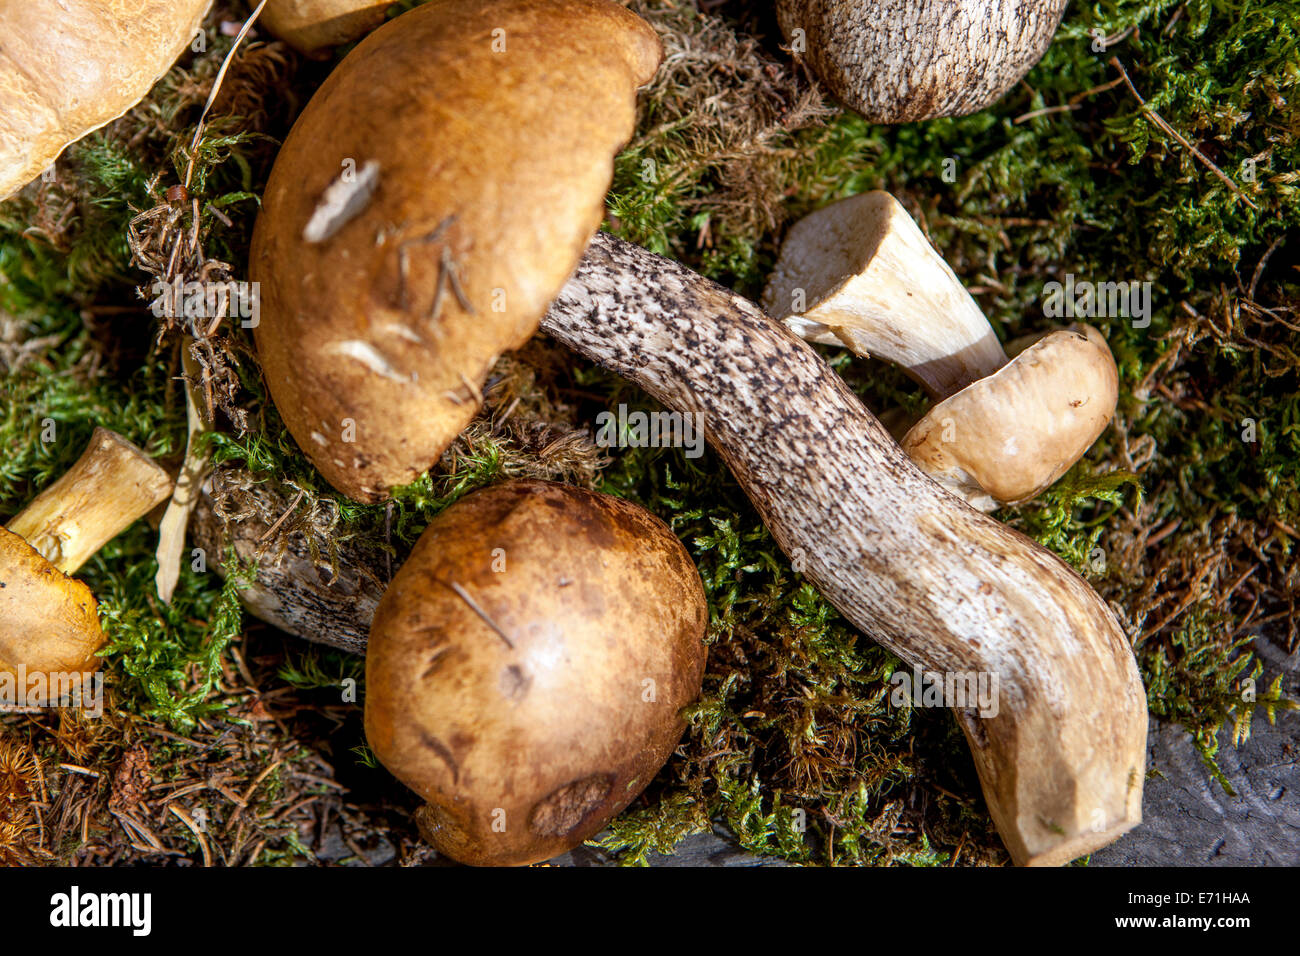 Still life of edible mushrooms on moss Stock Photo